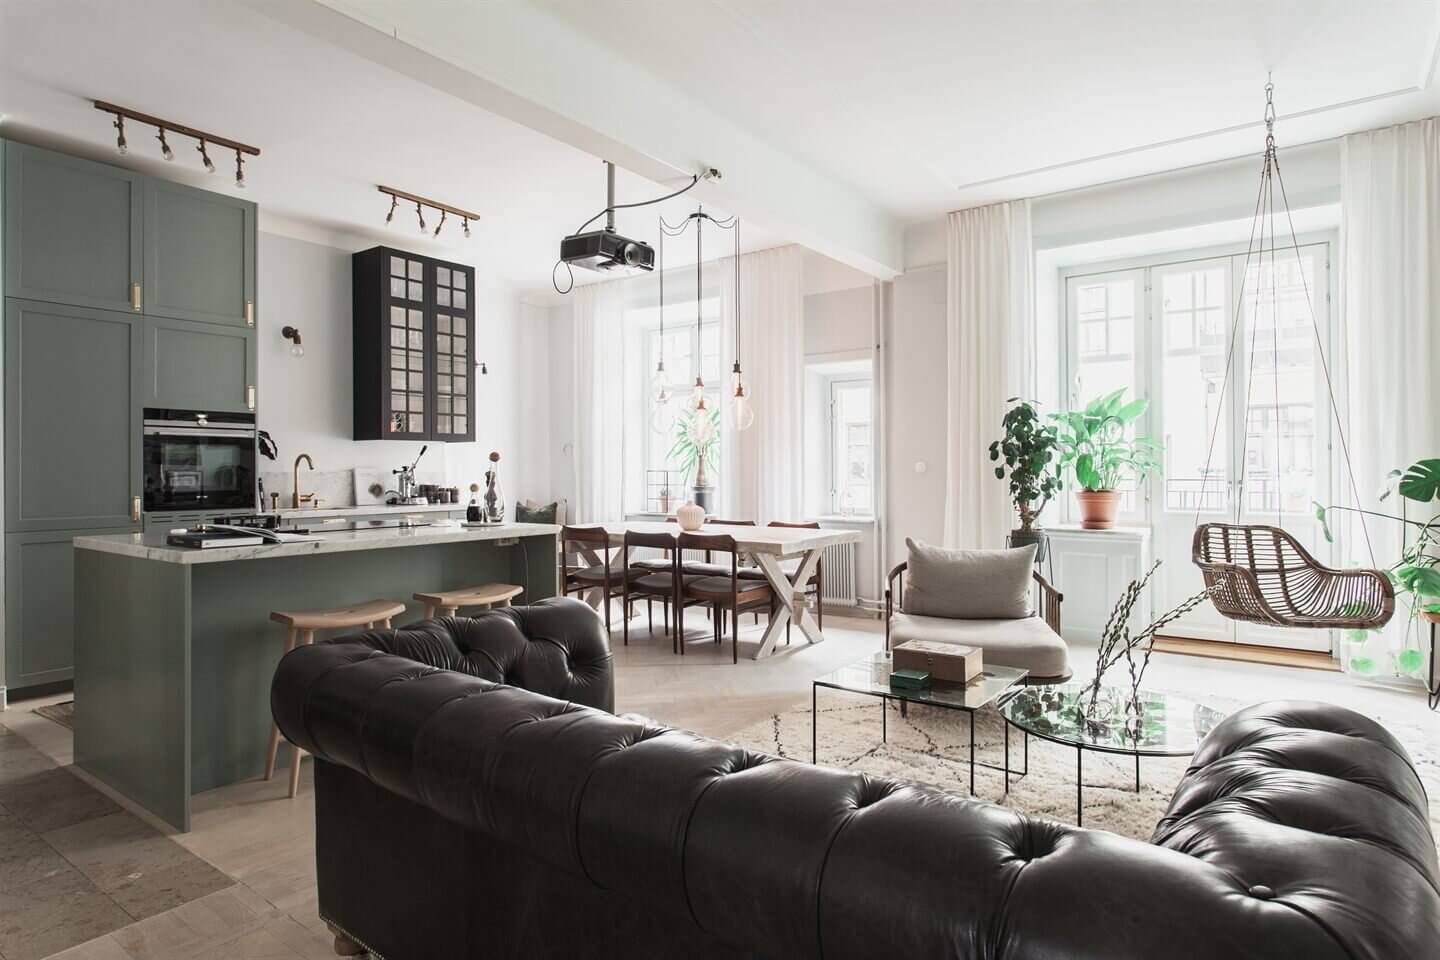 AnElegantOneBedroomApartmentinStockholm TheNordroom2 An Elegant One-Bedroom Apartment in Stockholm